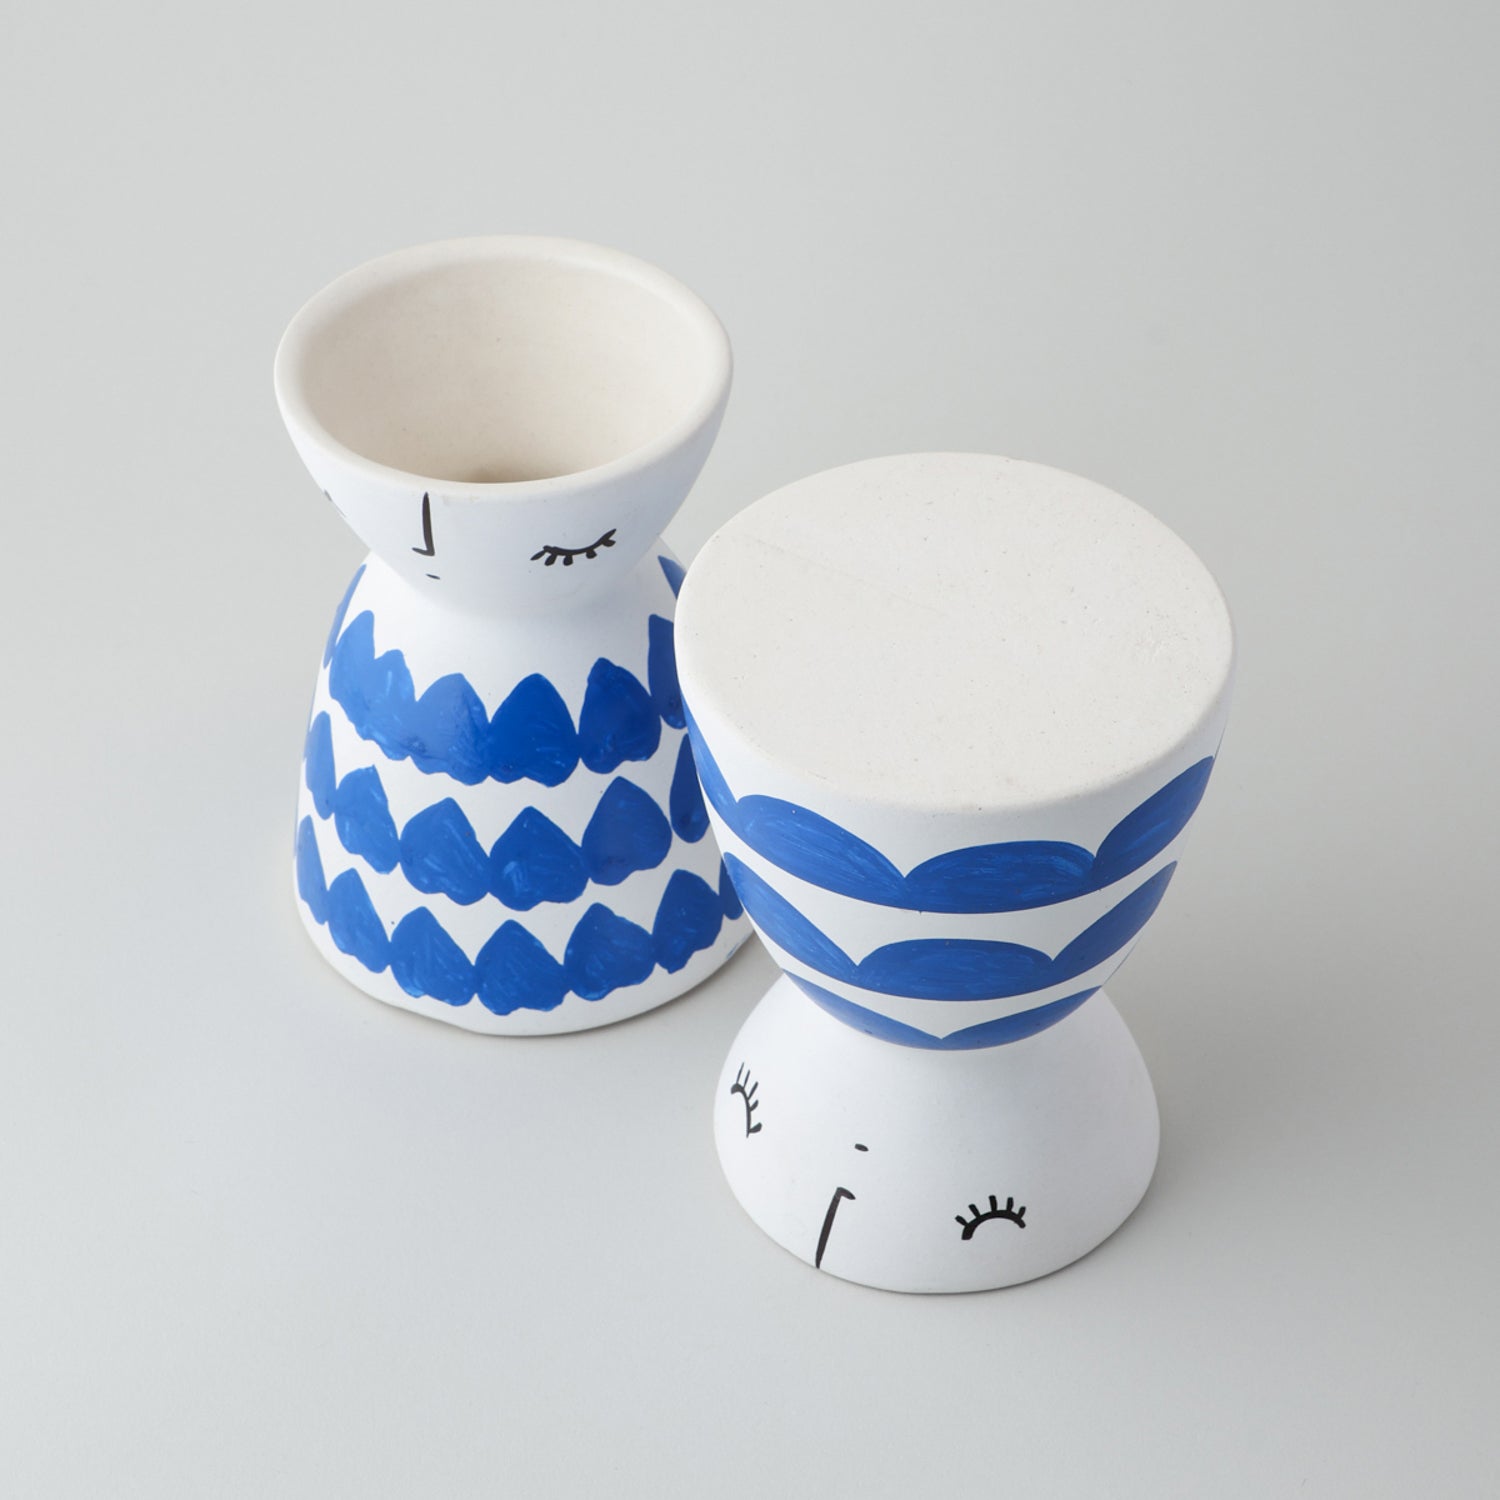 Ceramic Flower Vase (Set of 2) White Blue Hearts & Scallops 5x4